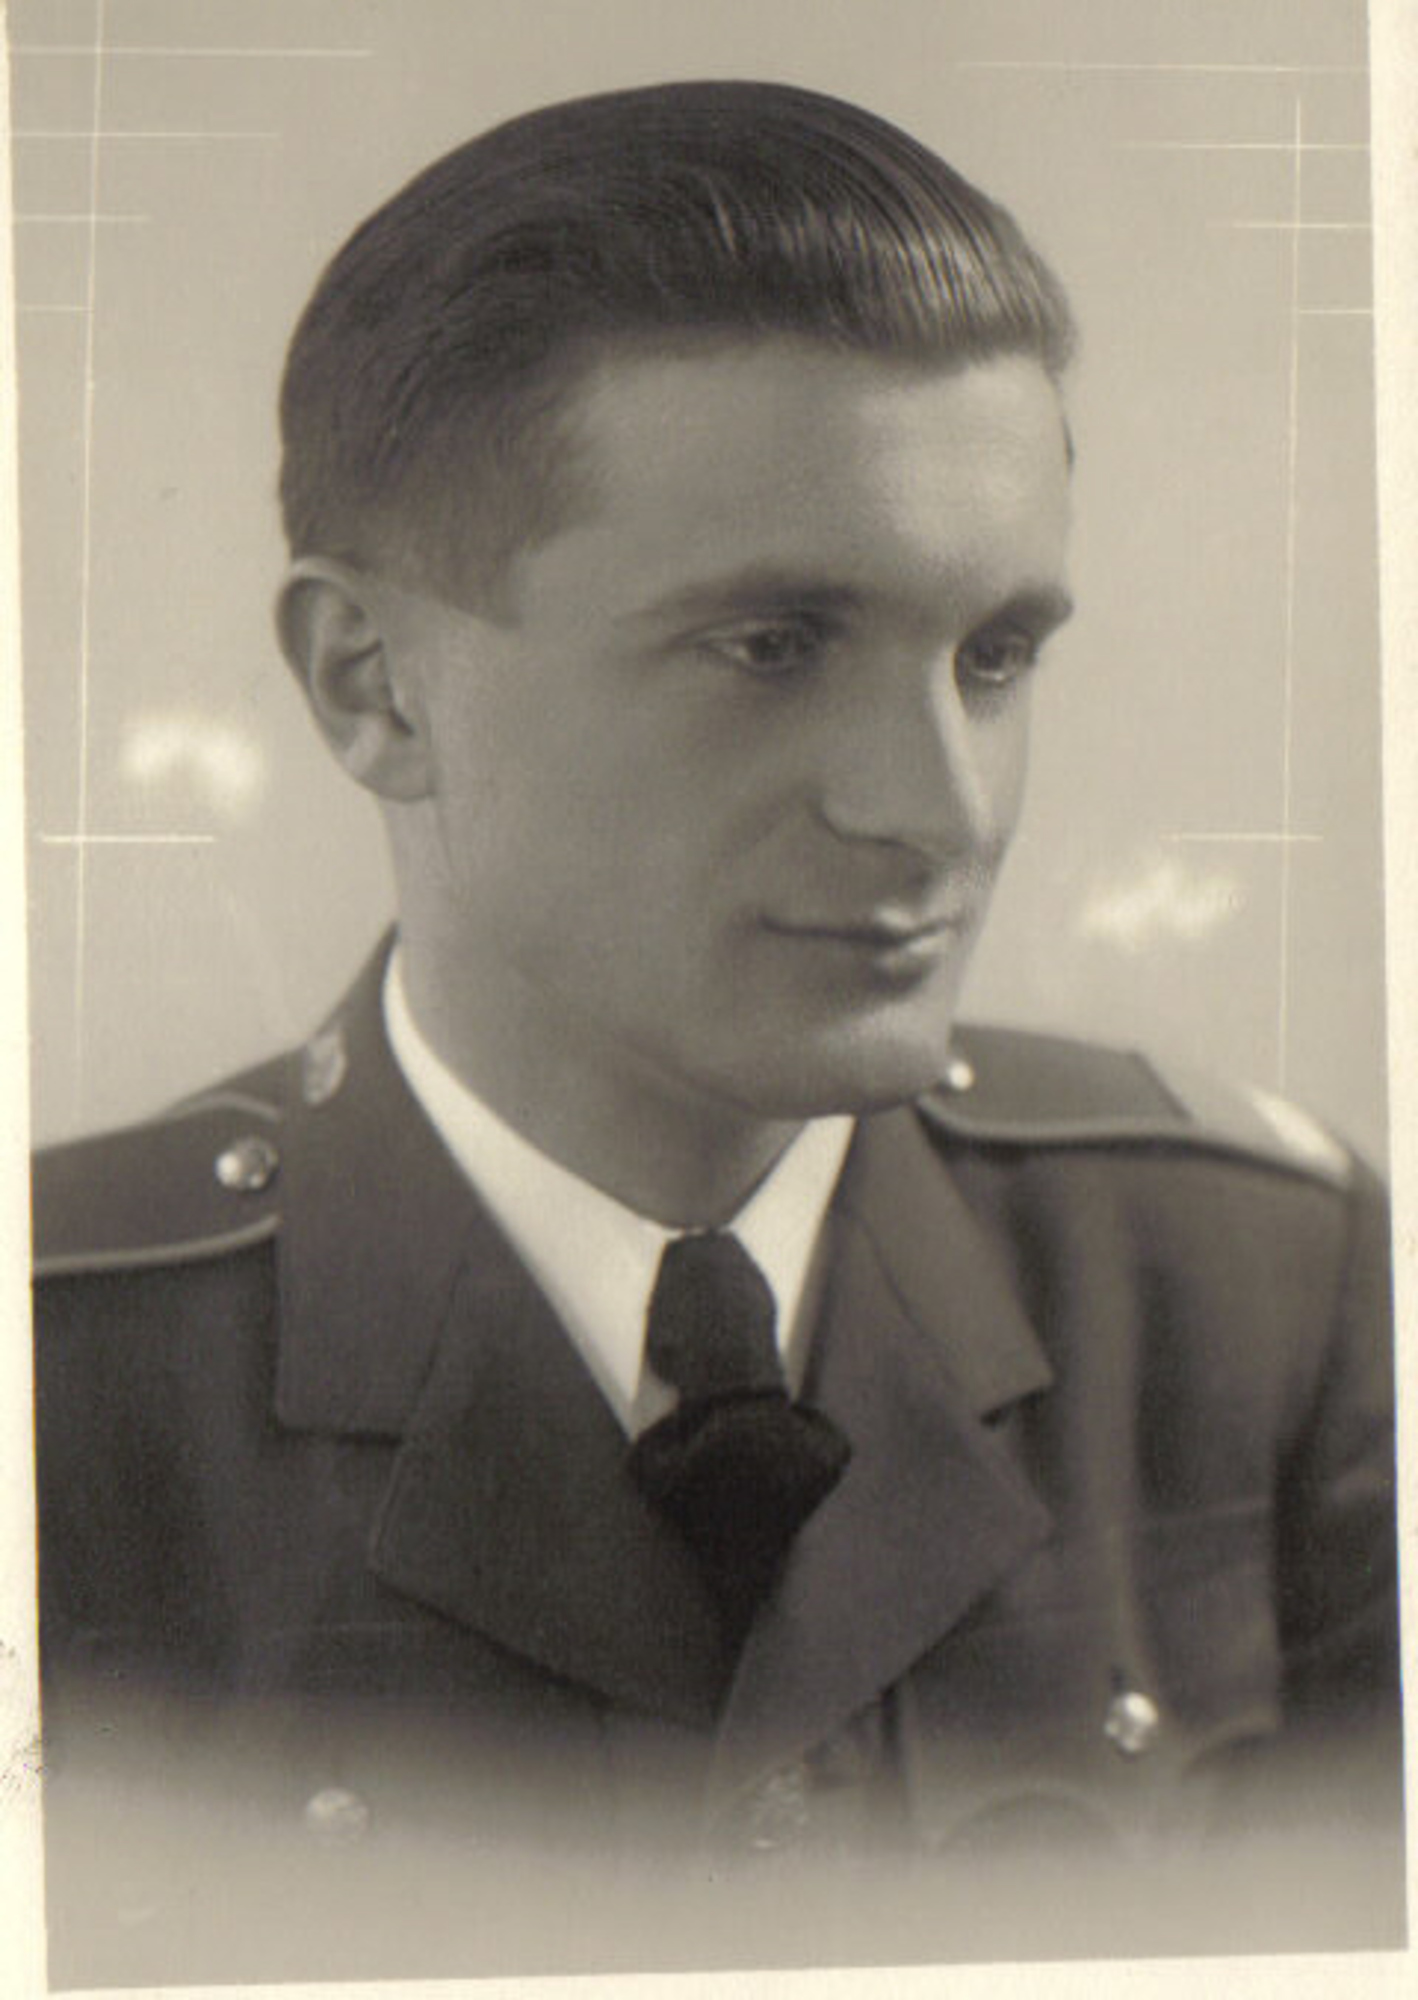 Stanislav Zeinert aspirant aviation Cheb